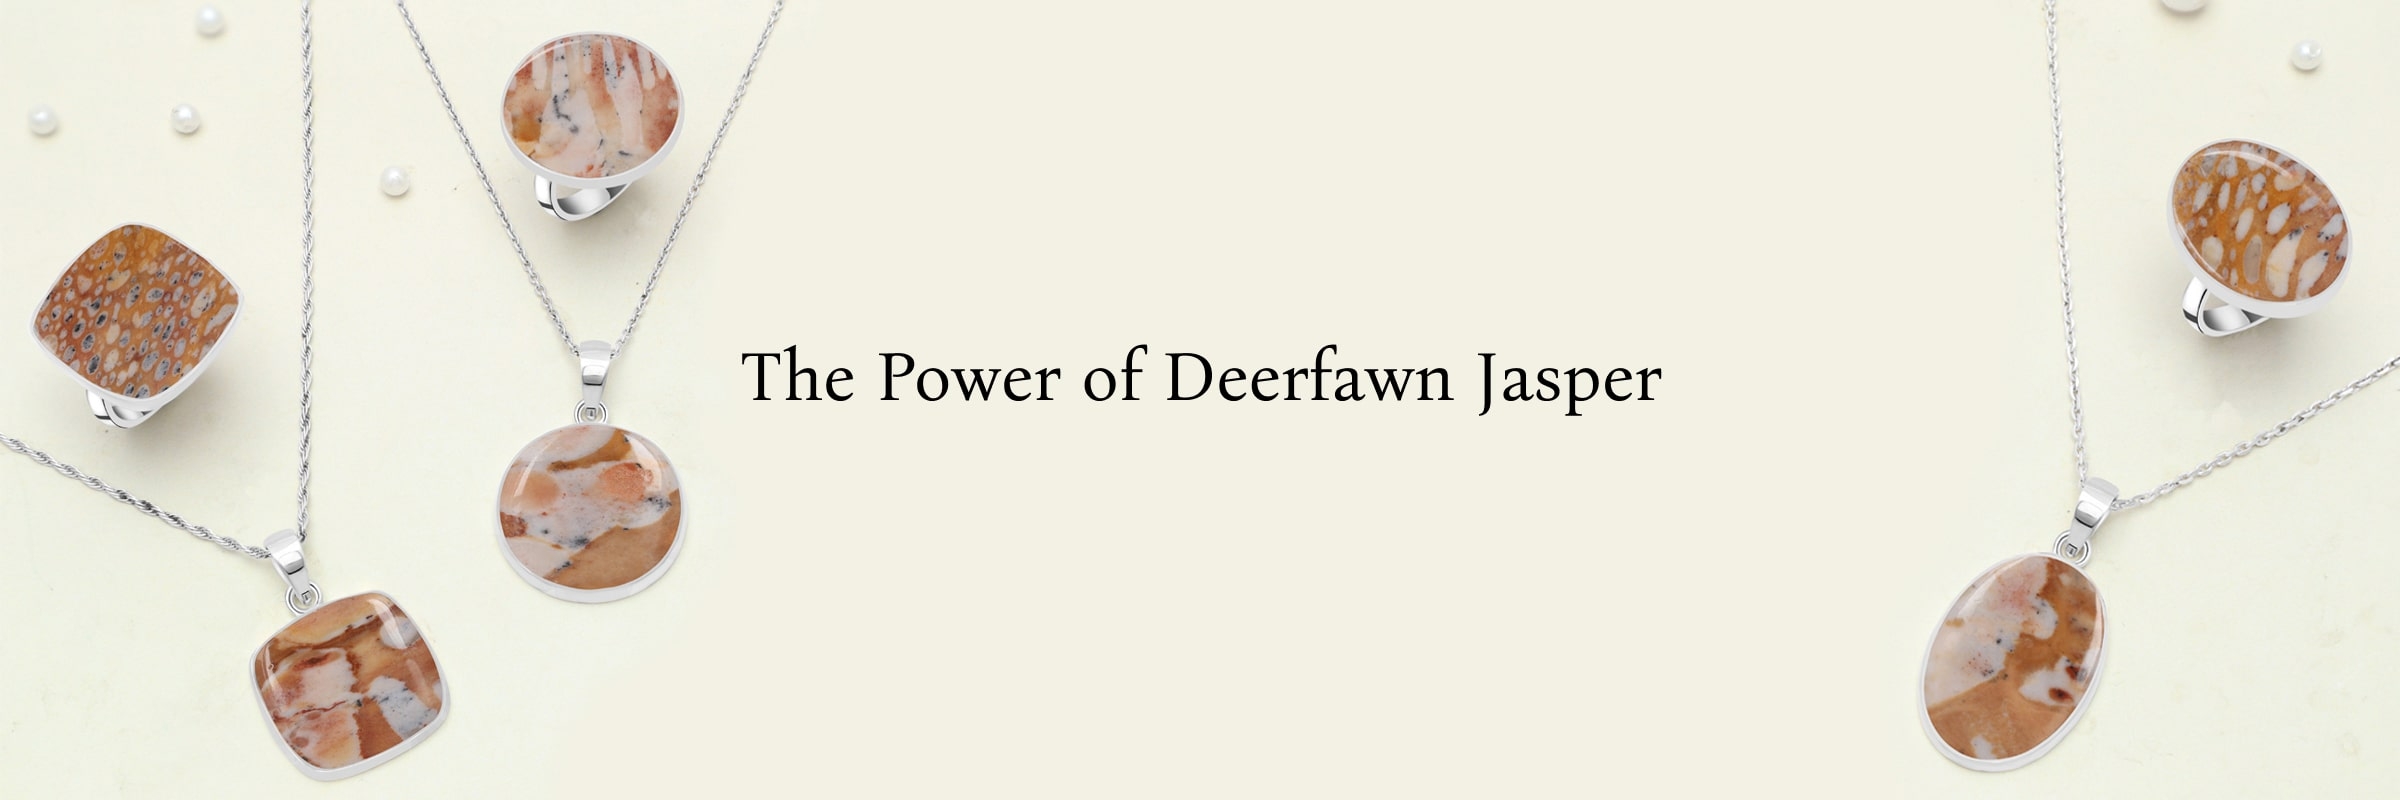 Uses of Deerfawn Jasper Stone